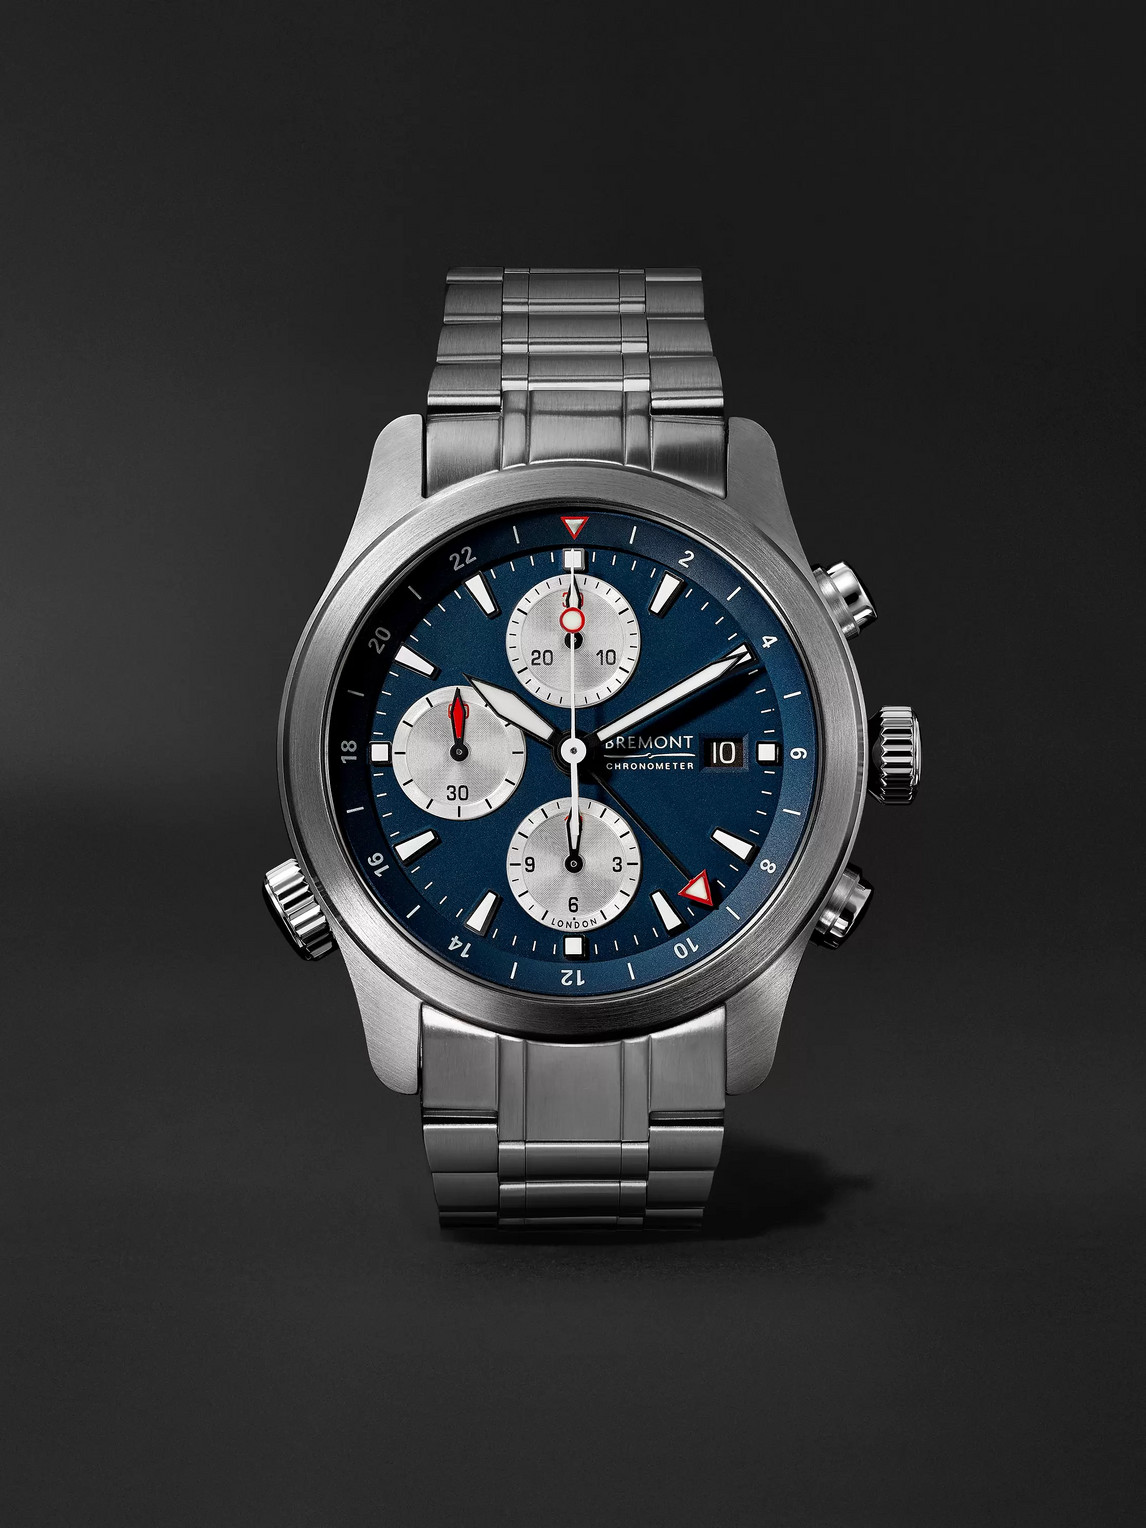 Bremont Alt1-zt Blue Limited Edition Automatic Gmt Chronograph 43mm Stainless Steel Watch, Ref. No. Alt1-zt-